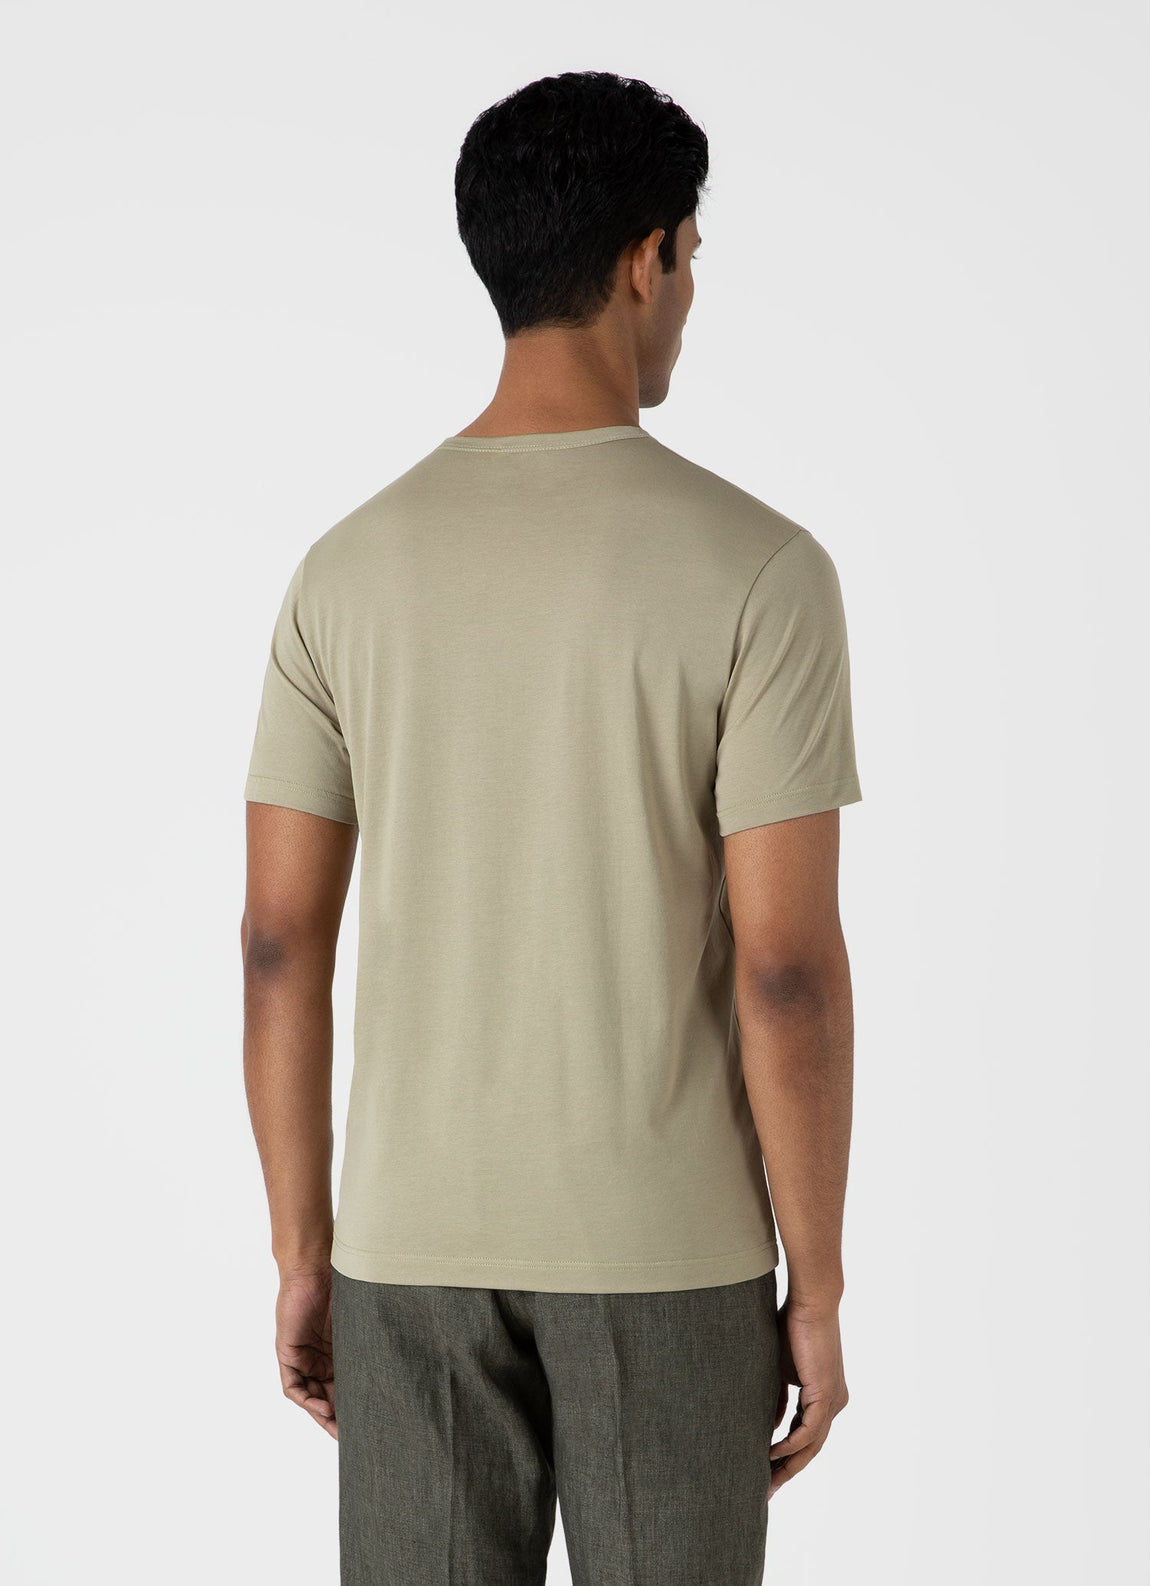 Men's Classic T-shirt in Pale Khaki